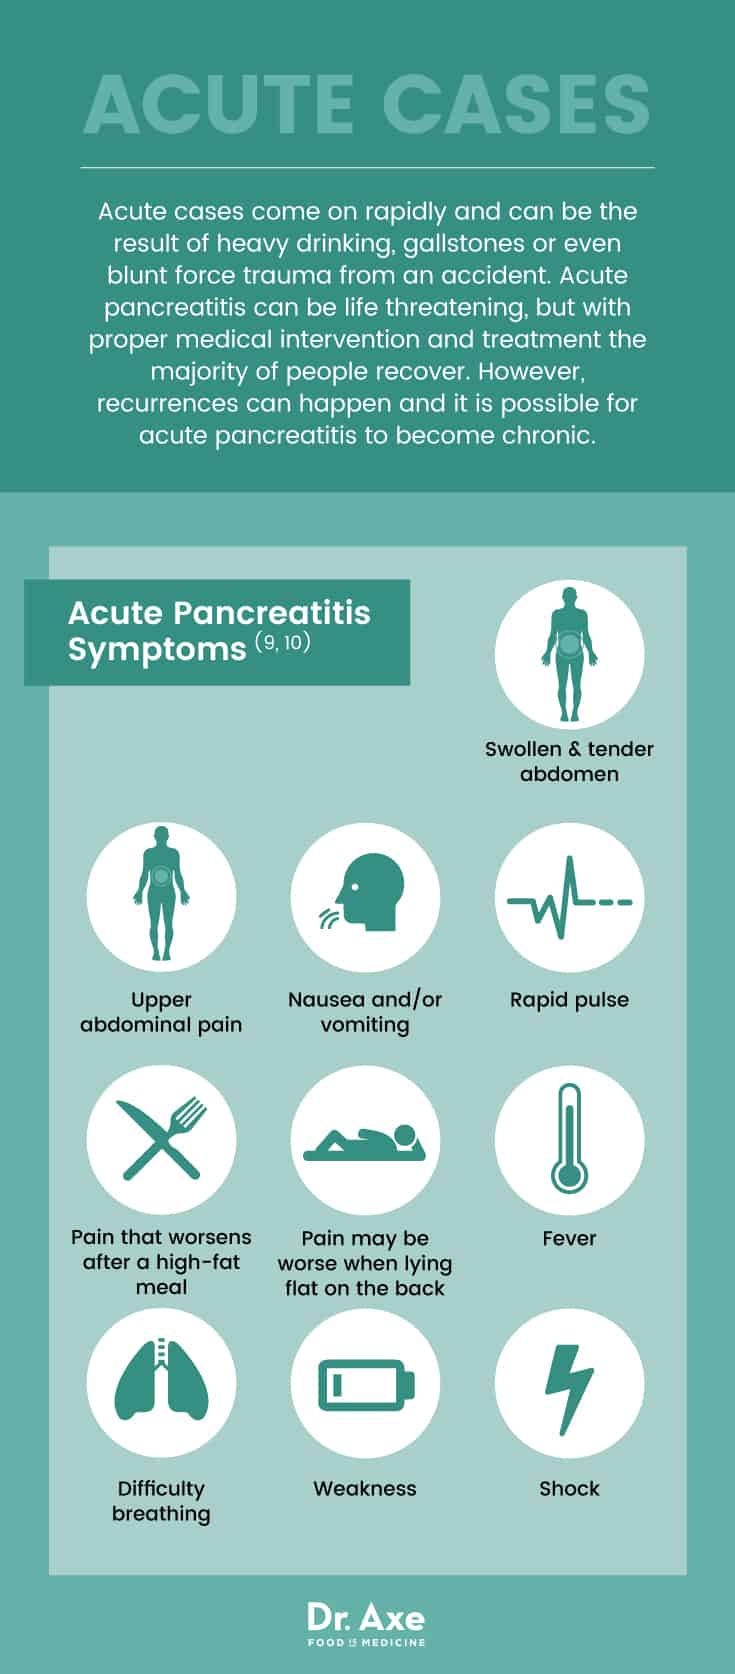 Acute pancreatitis symptoms - Dr. Axe